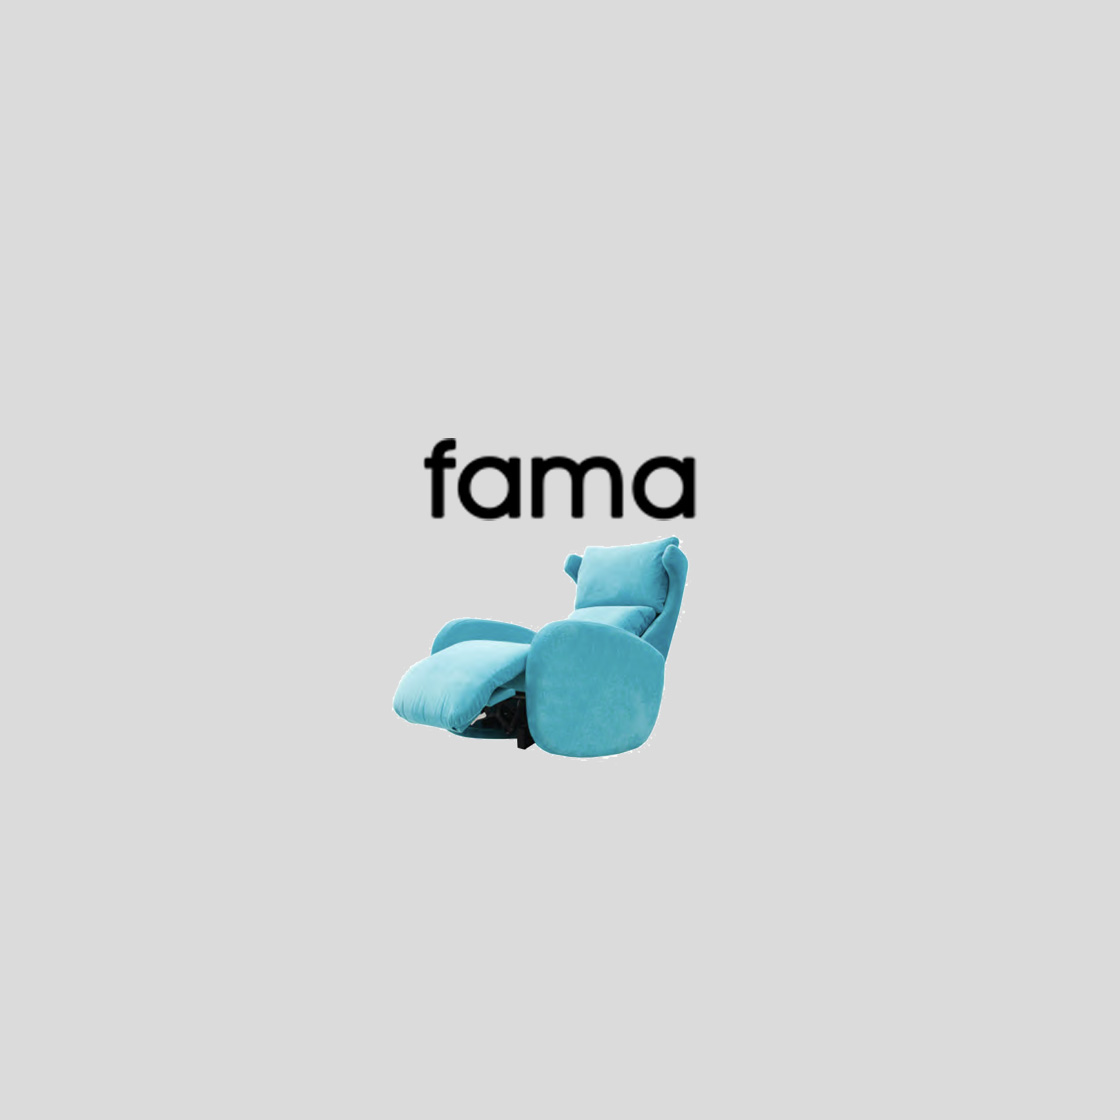 Fama's Website - Learn More